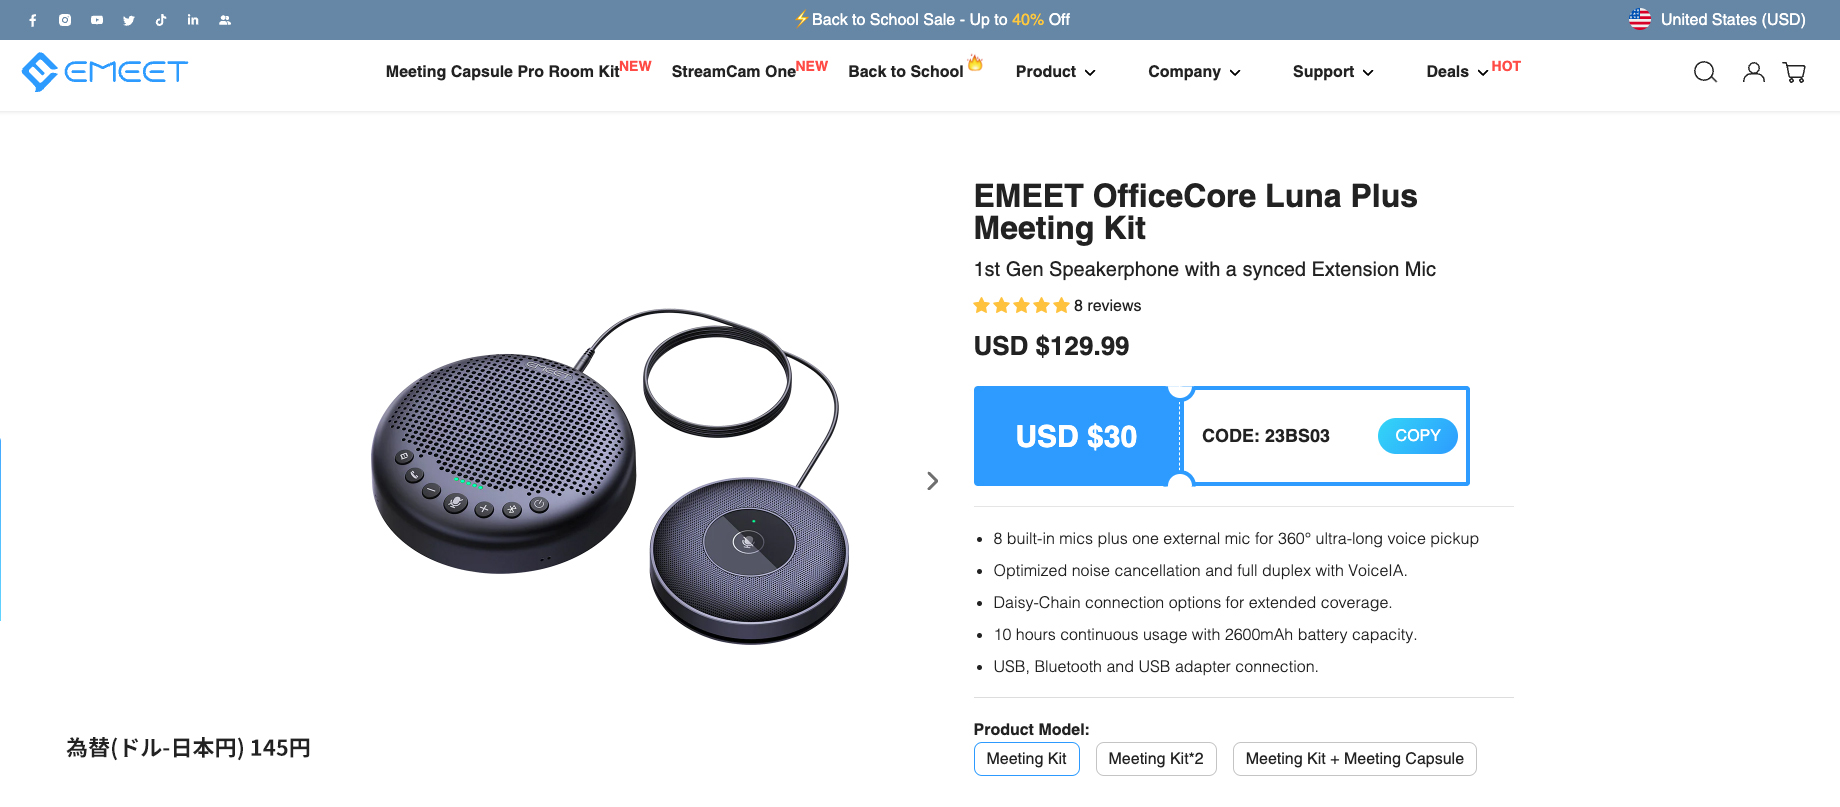 EMEET OfficeCore Luna Plus Meeting Kit